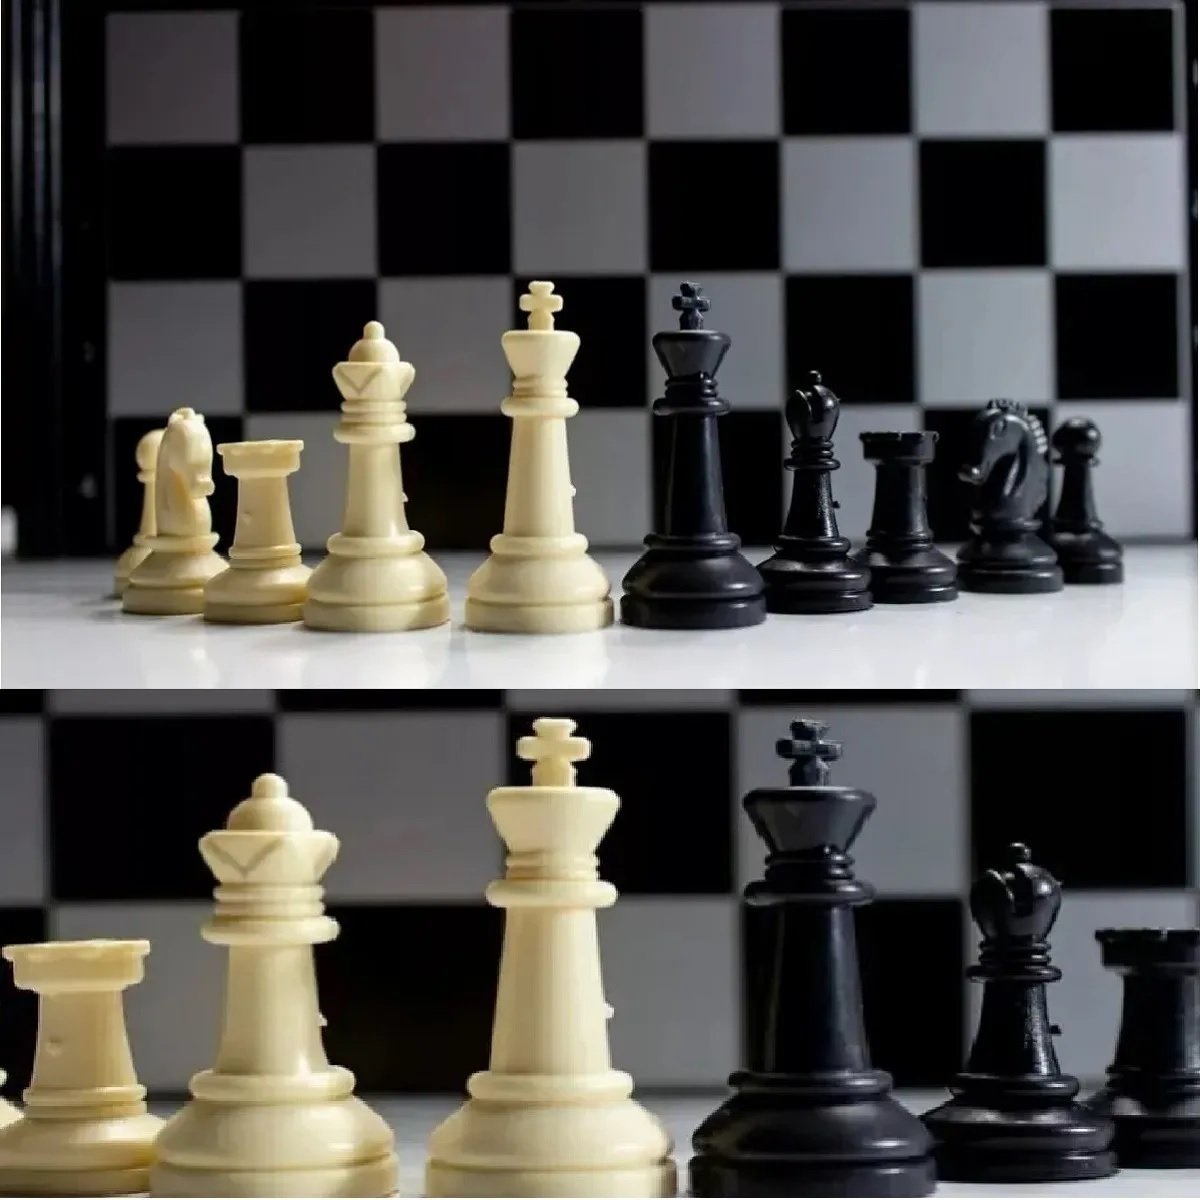 Jogo tabuleiro xadrez com imas profissional